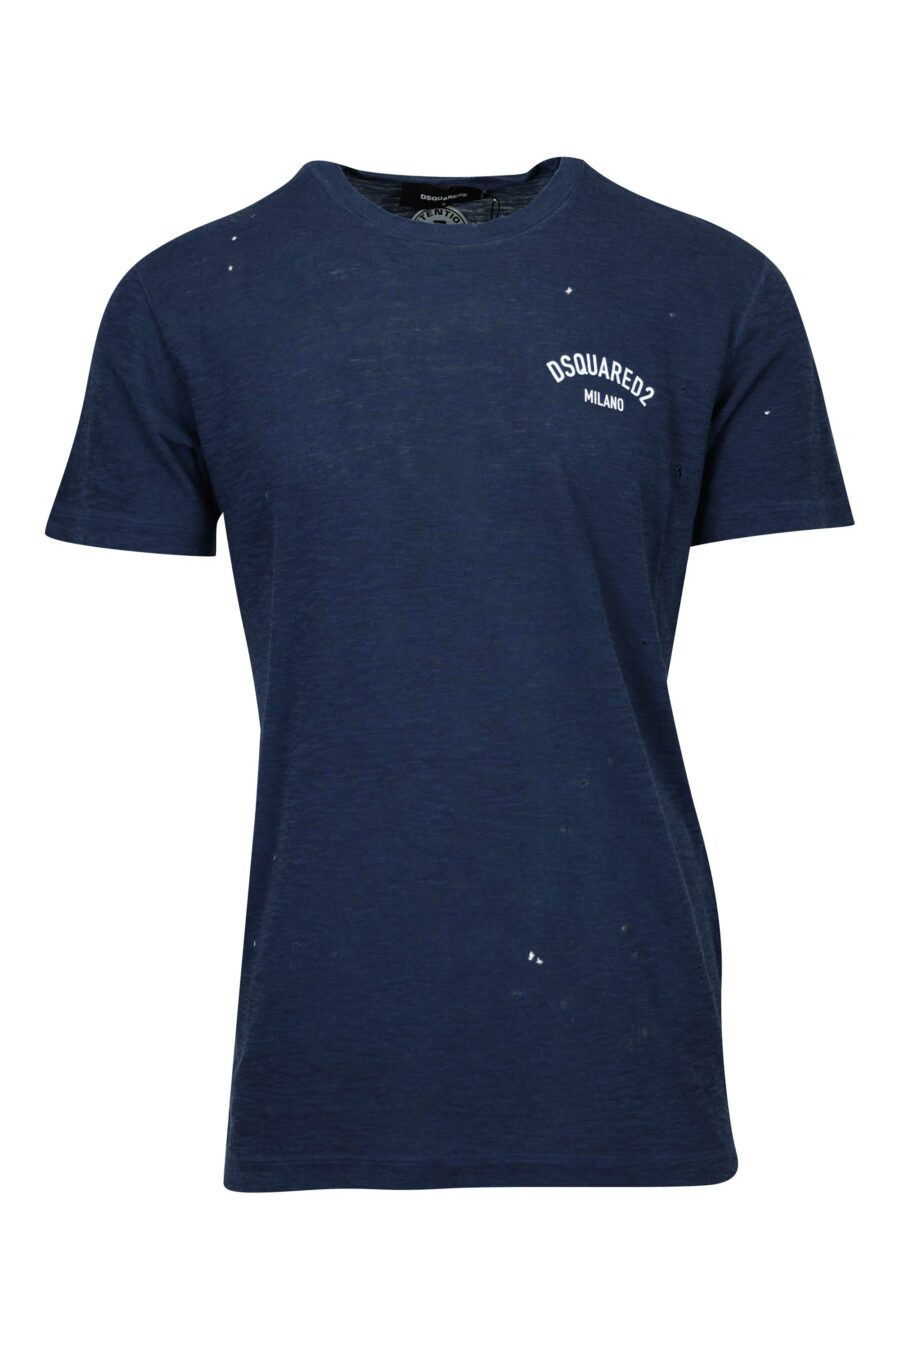 Dunkelblaues T-Shirt mit Mini-Logo "milano" - 8054148453664